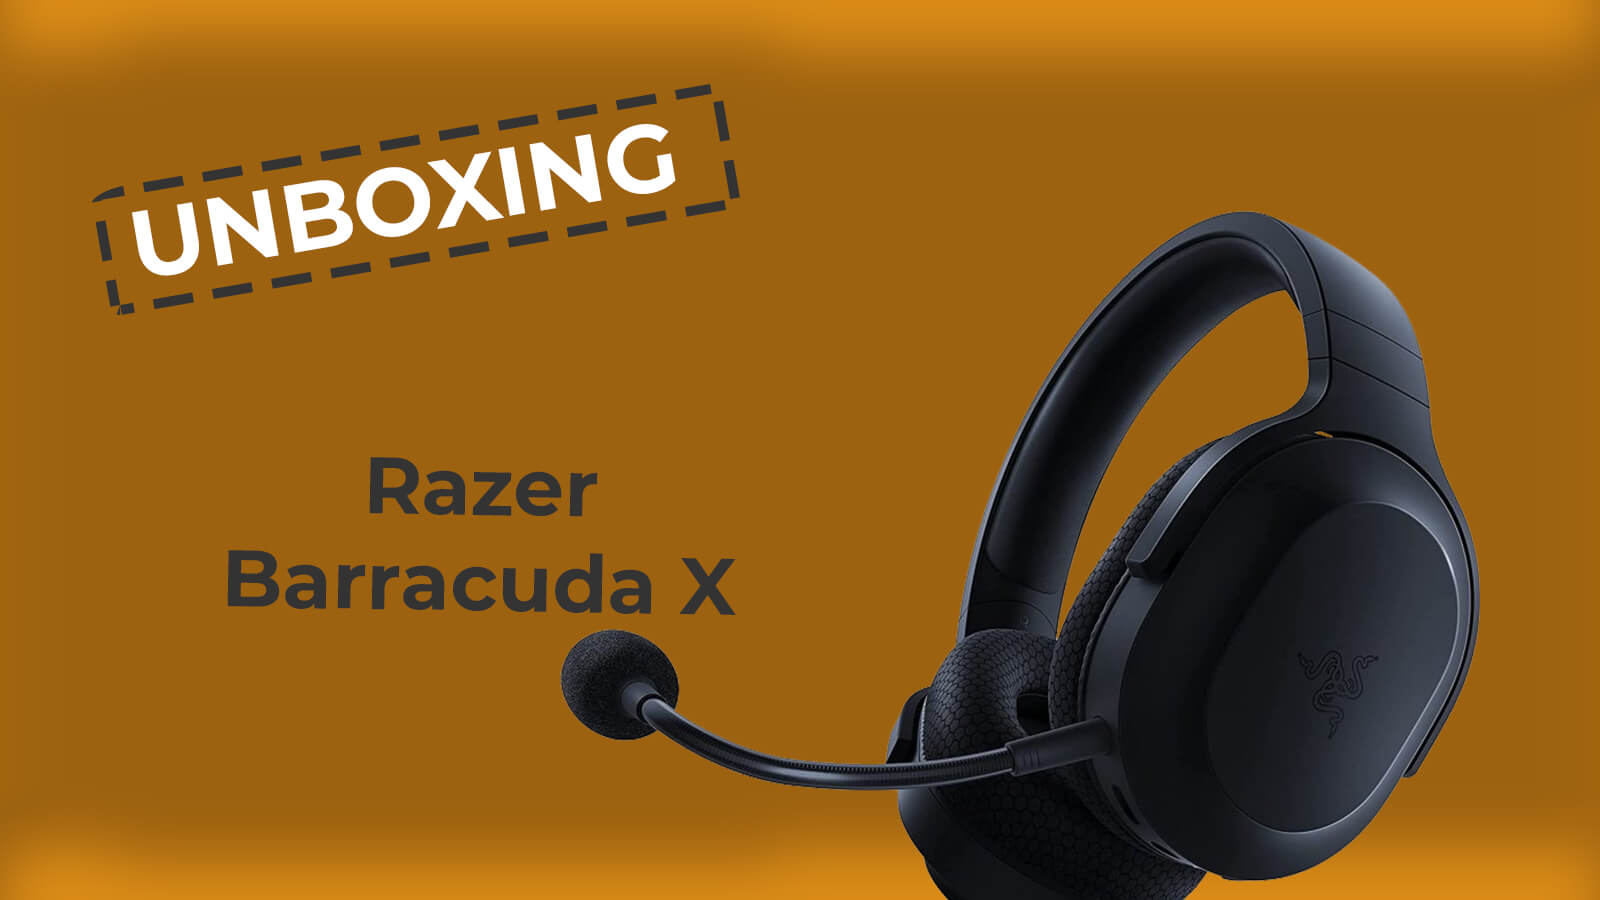 Razer Barracuda X Unboxing